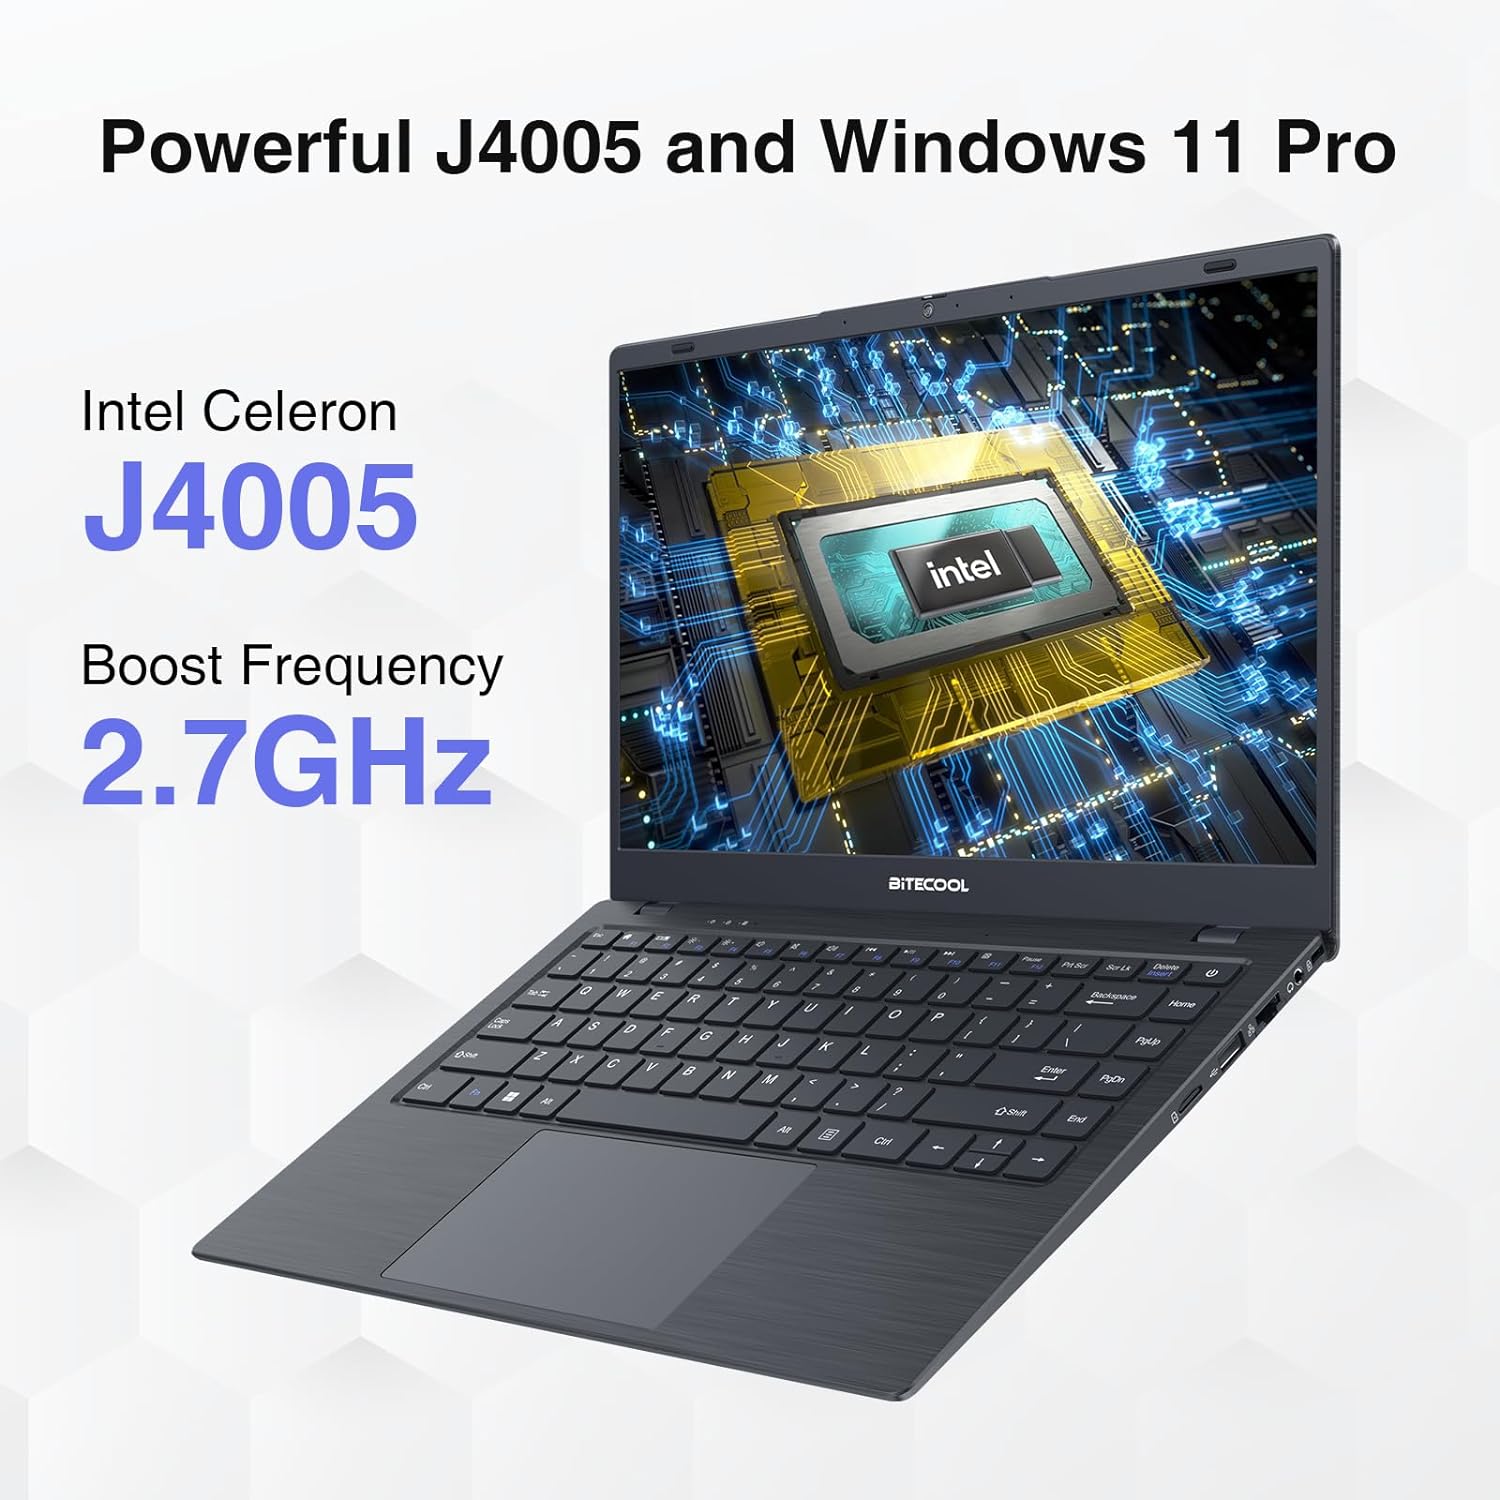 BiTECOOL 14-inch Windows 11 Laptop Computer Review